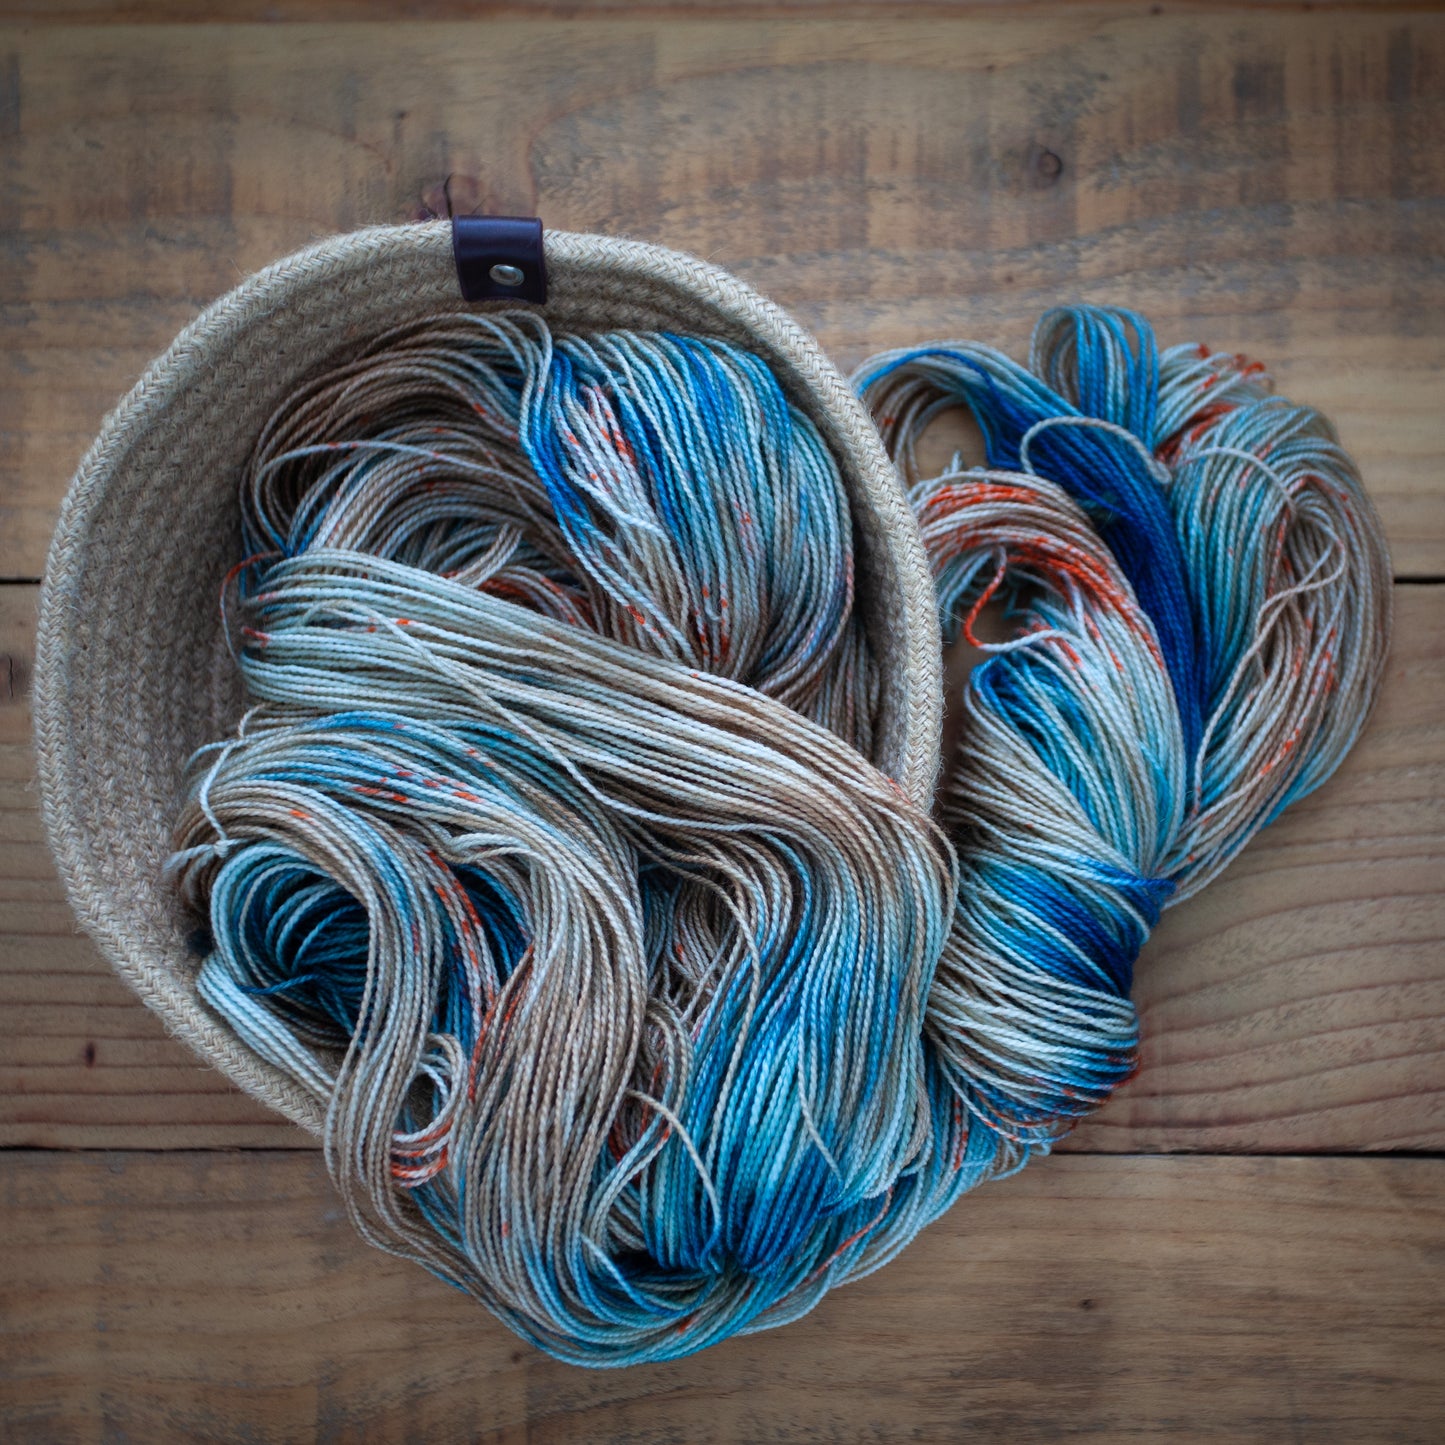 "Sea shore breeze" - hand dyed yarn